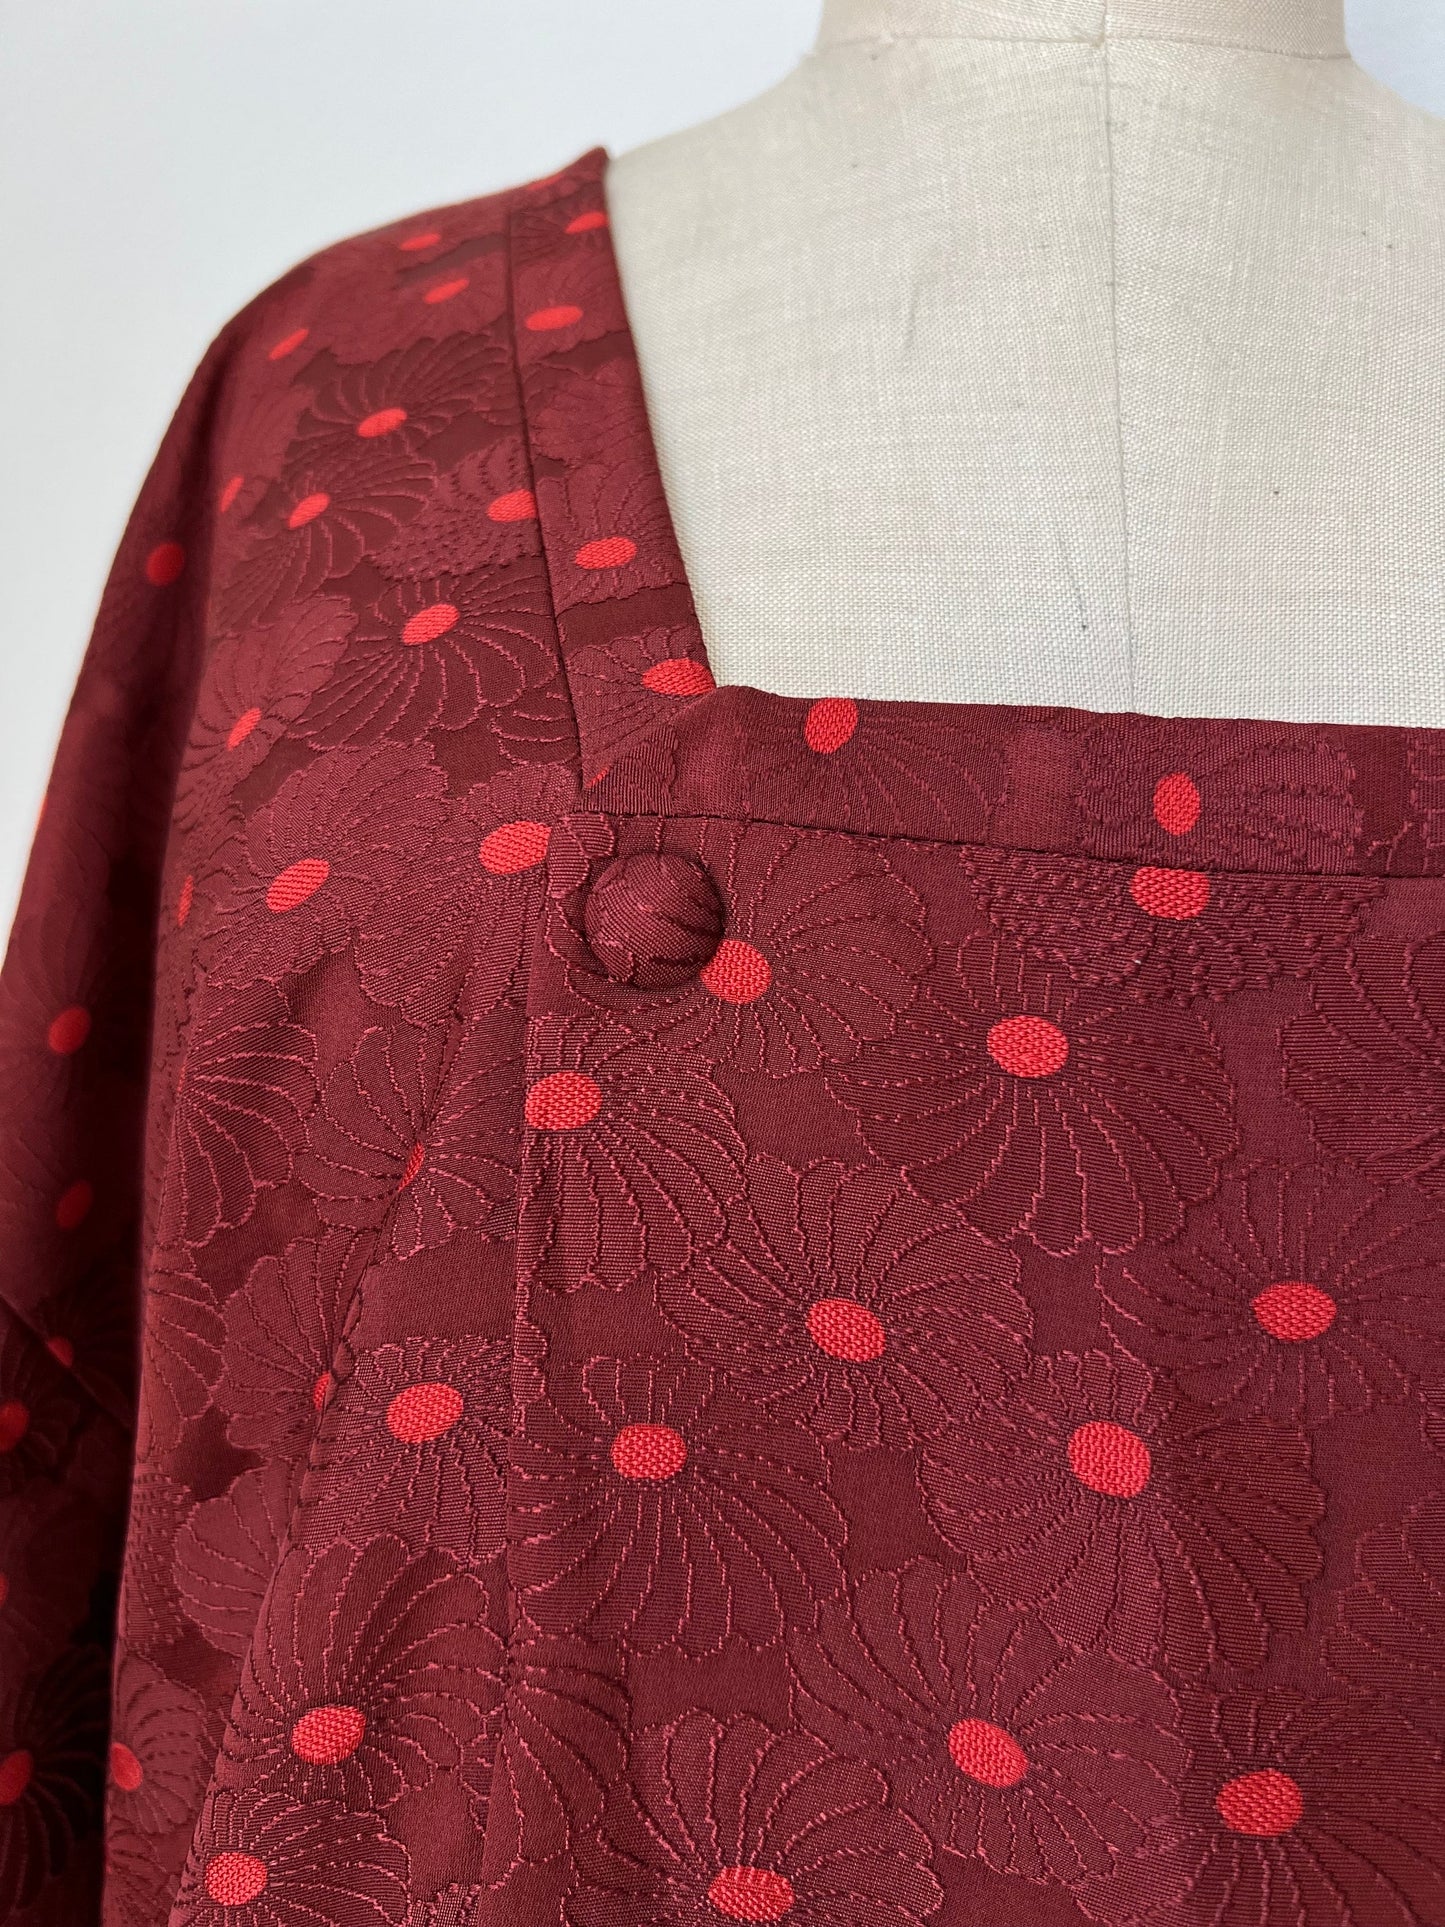 Jacket Vintage Silk Kimono Robe Japanese Brown Jacket For Vintage Lover Gift Vintage Kimono